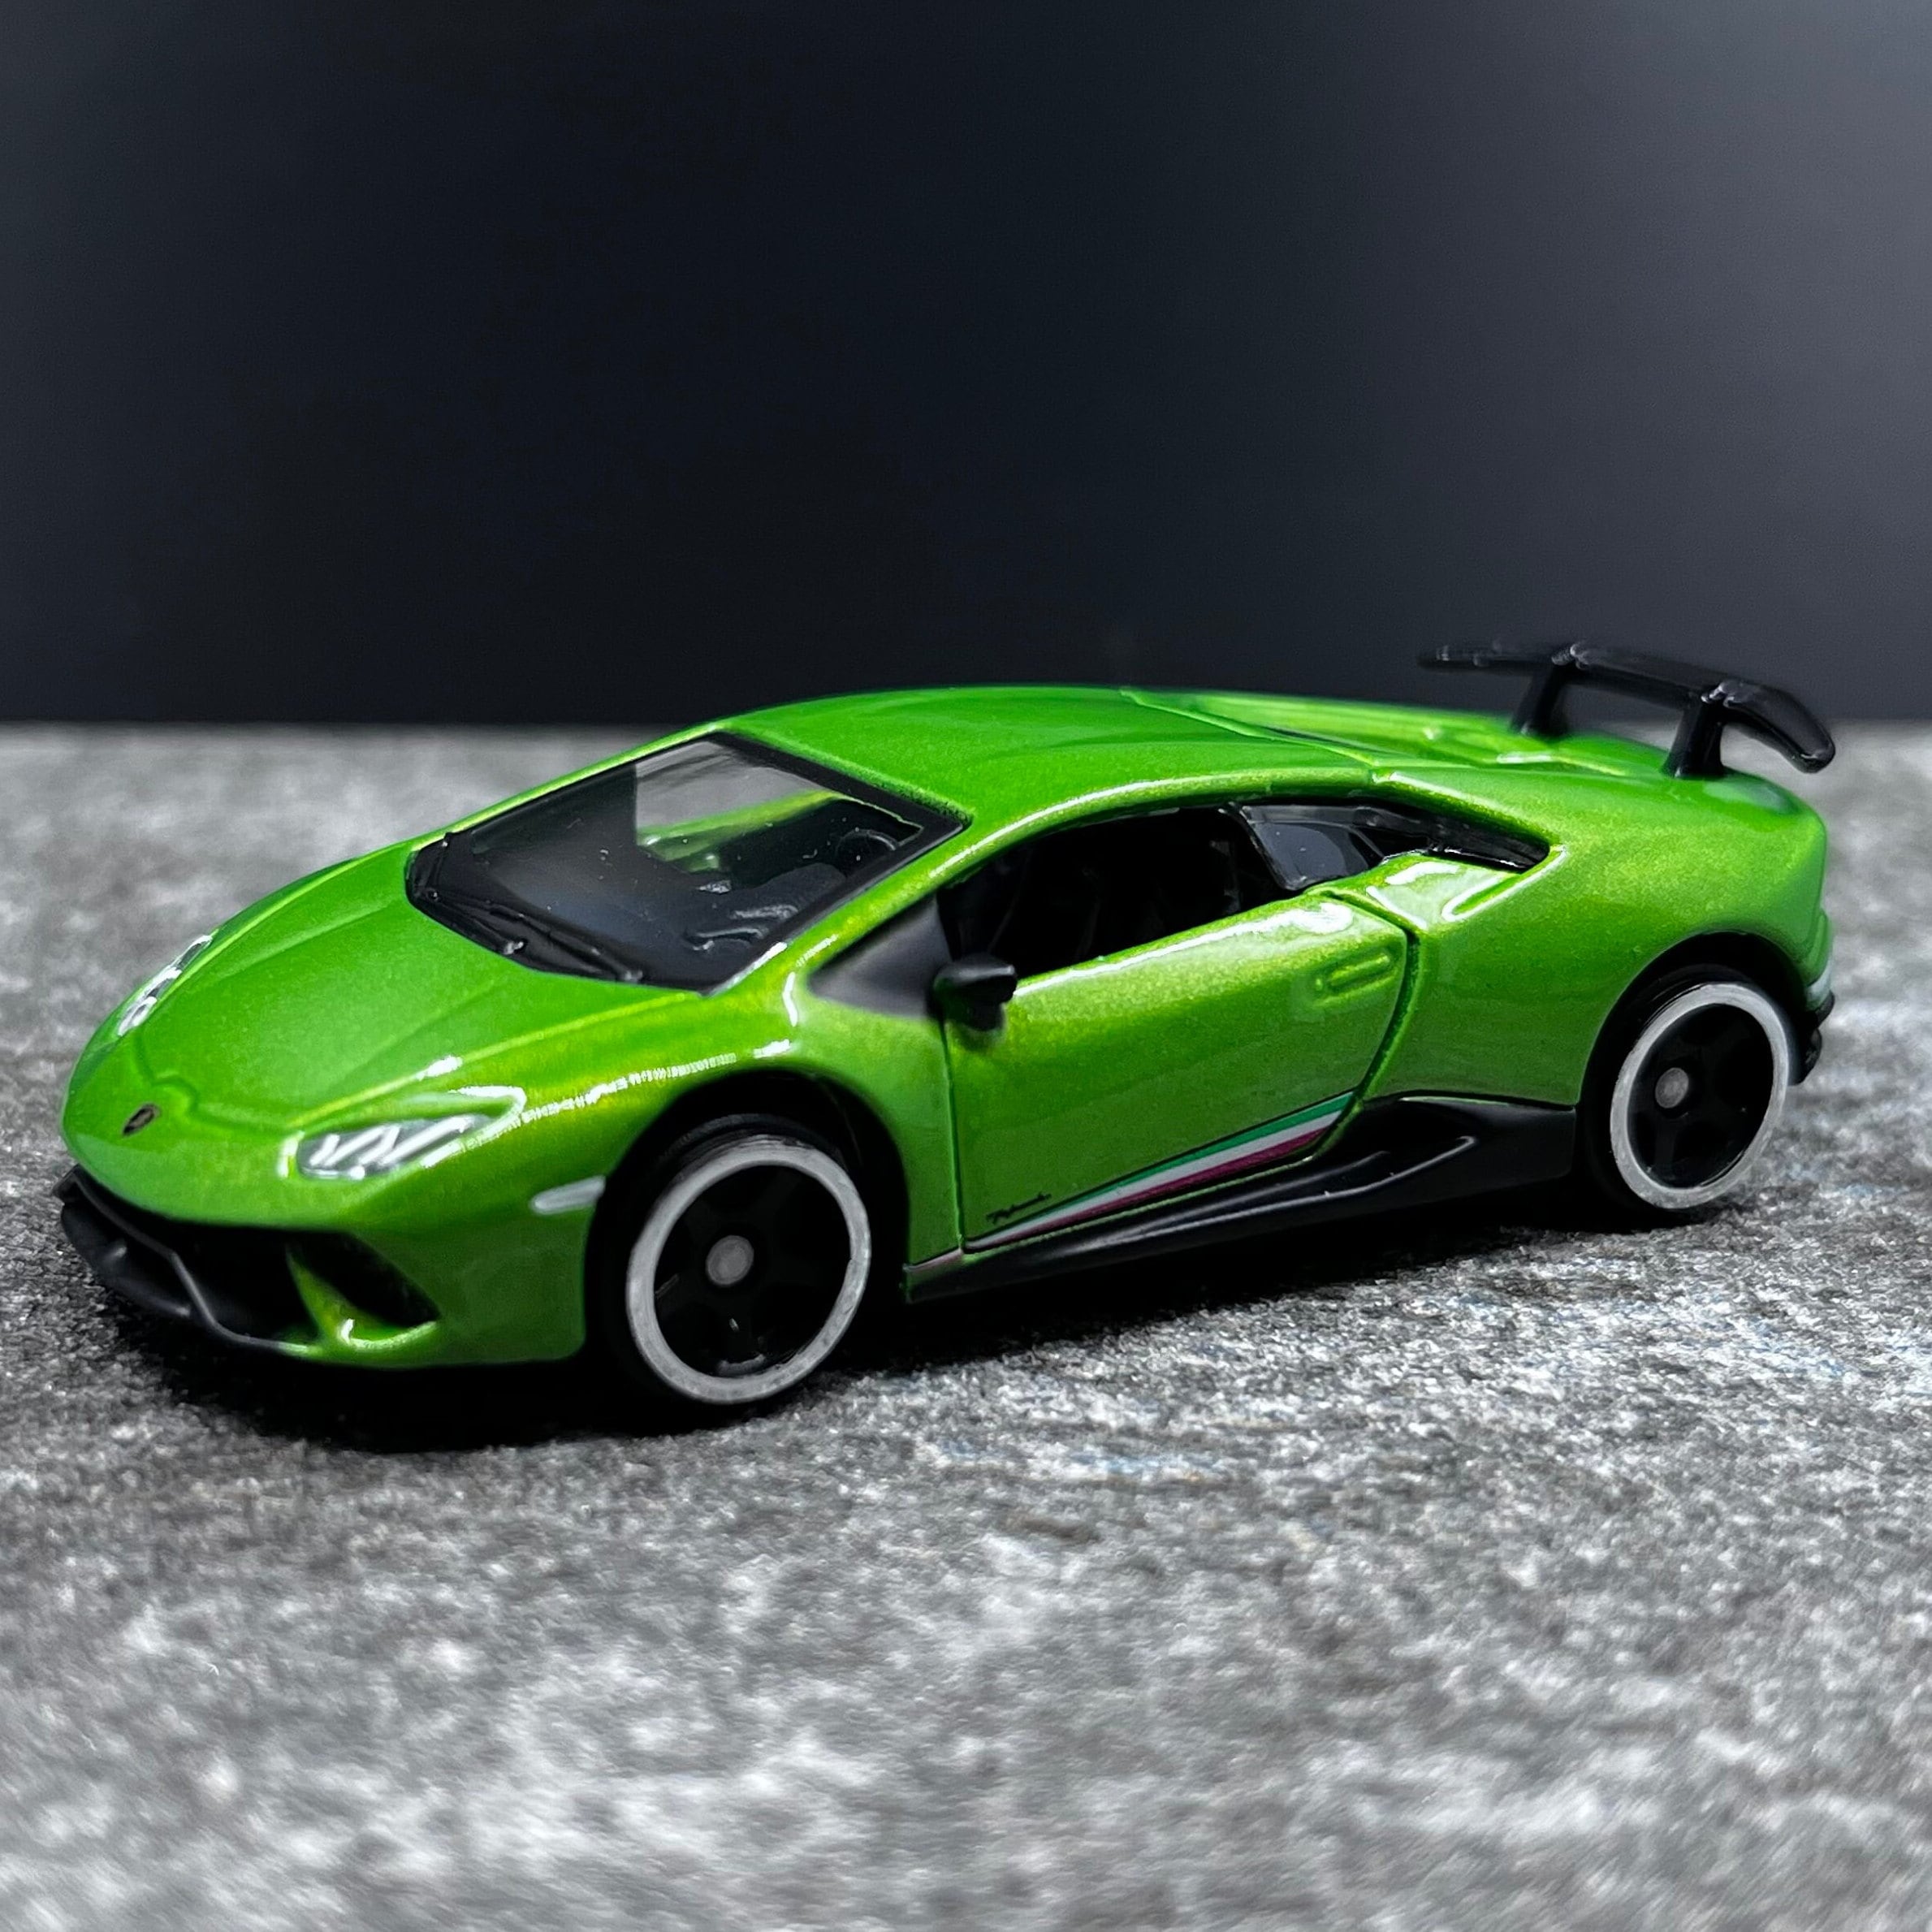 Carrinho Hot Wheels - Lamborghini Essenza SCV12 - Mattel - Verde